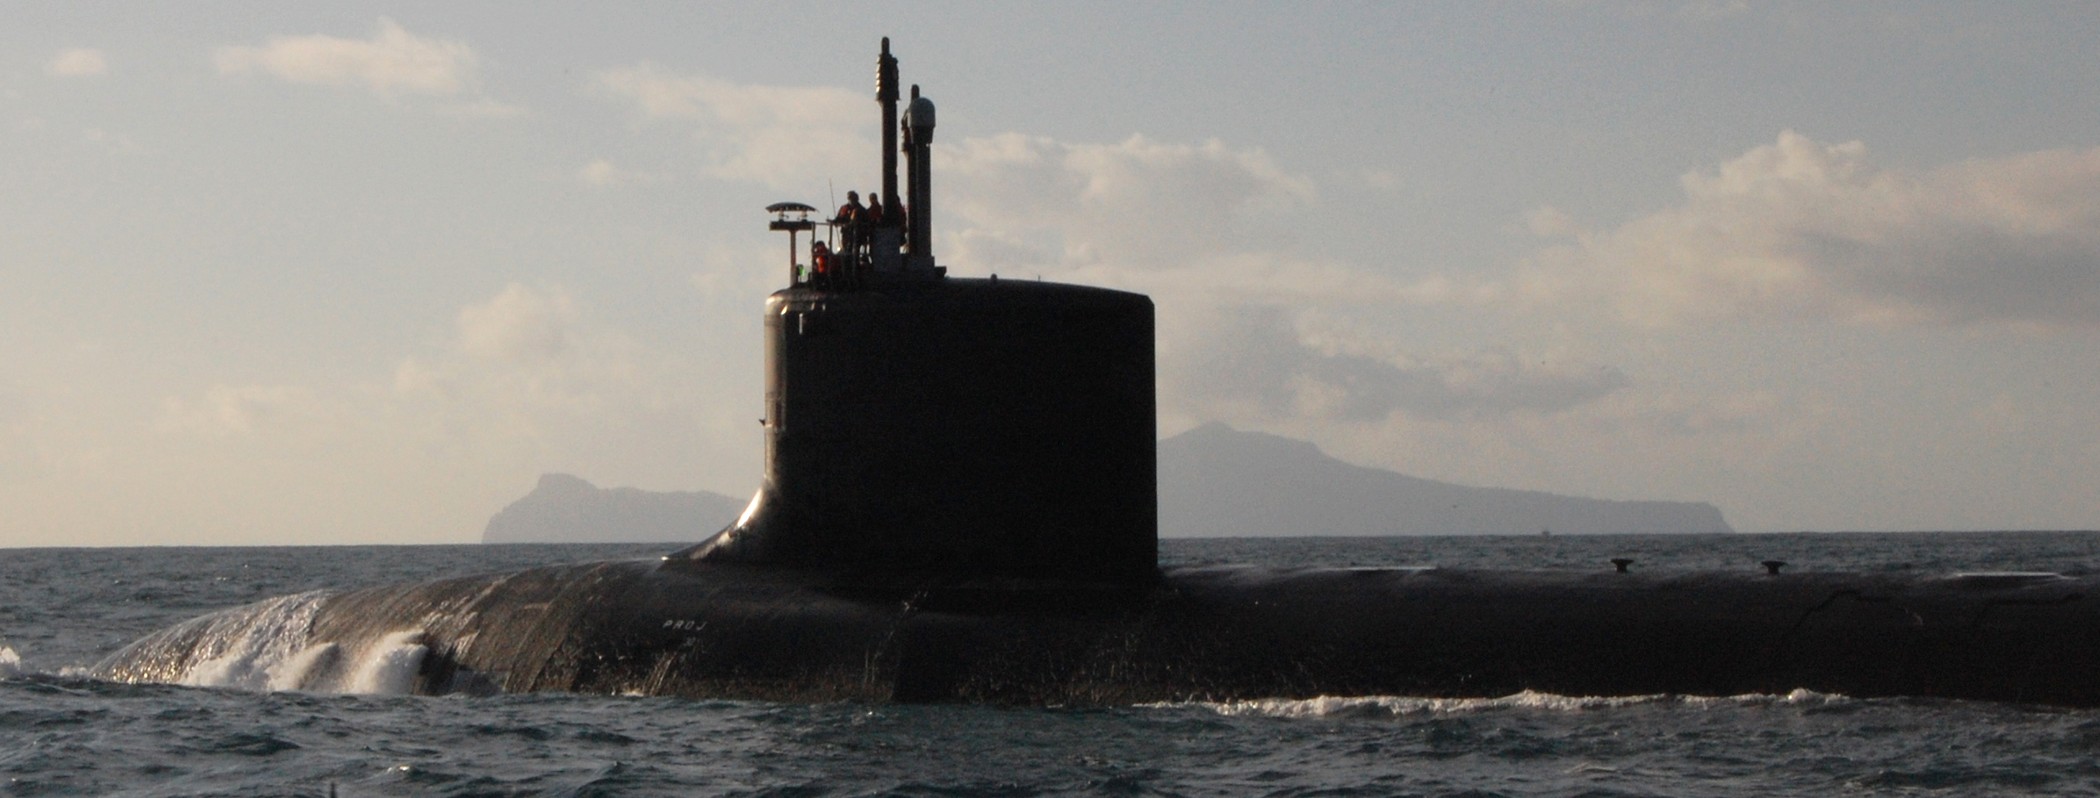 ssn-774 uss virginia attack submarine navy 2010 19 bay of naples italy